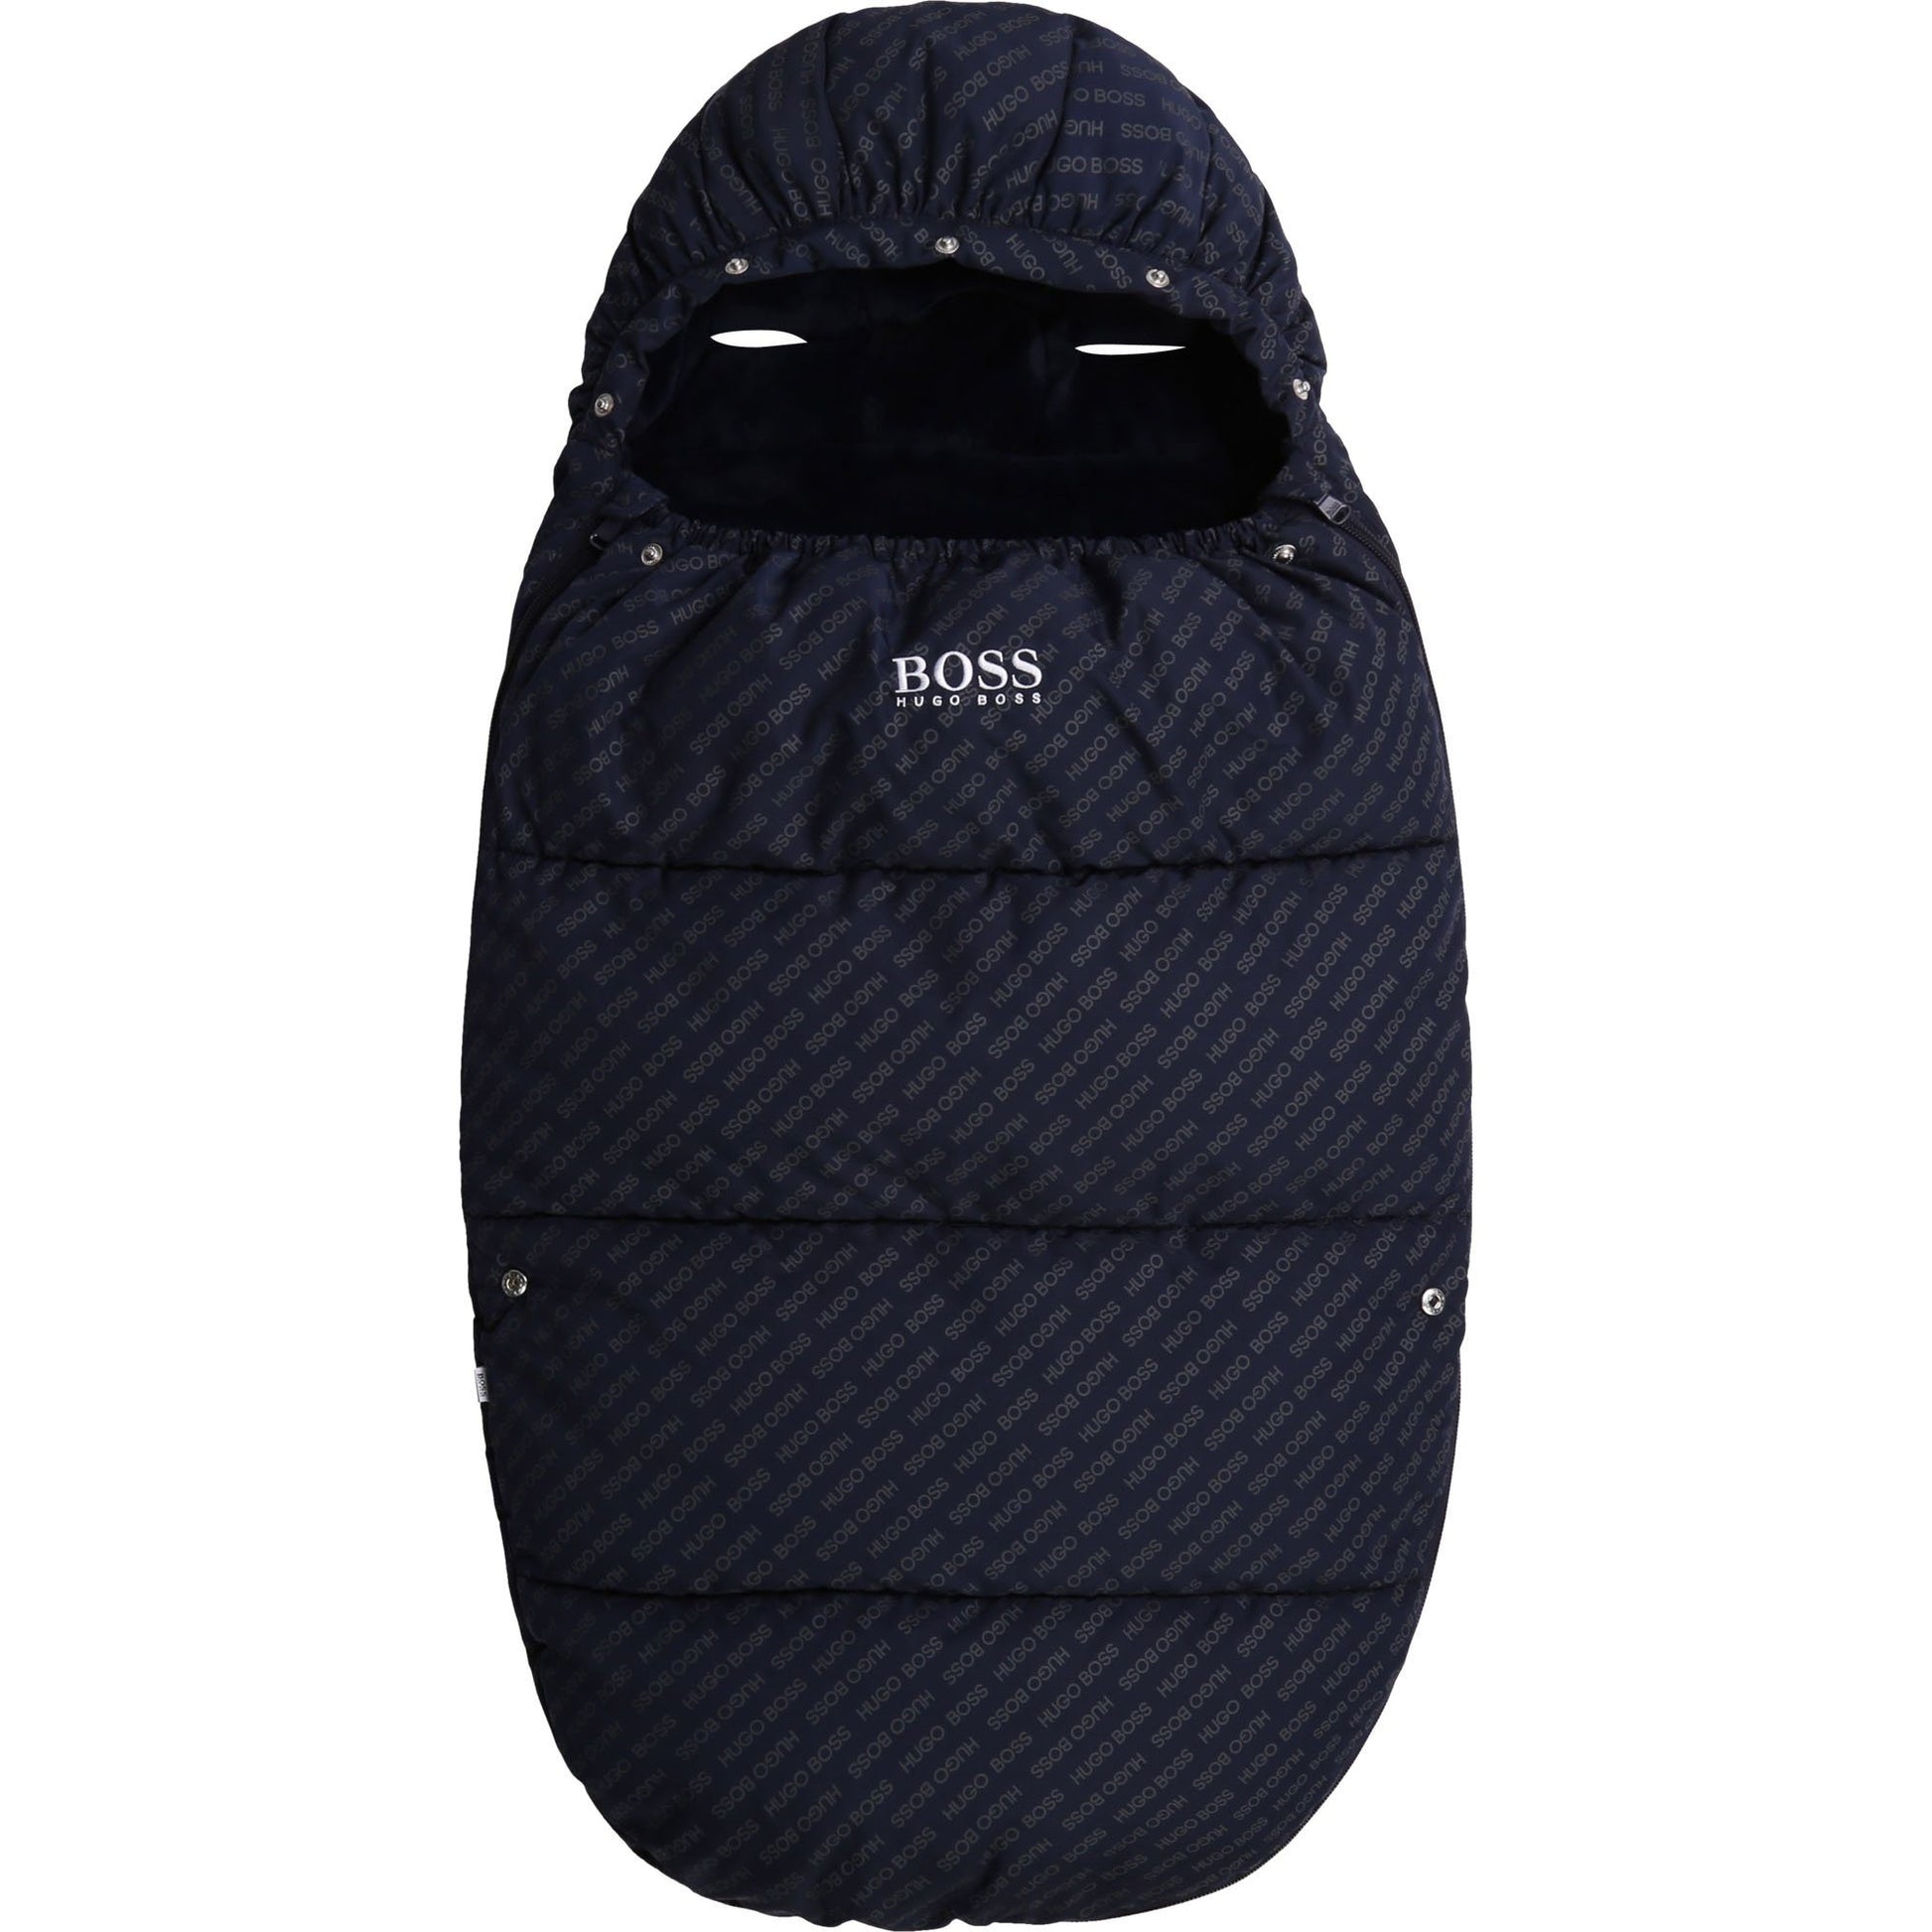 Hugo Boss Baby Sleeping Bag Baby Accessories Hugo Boss 